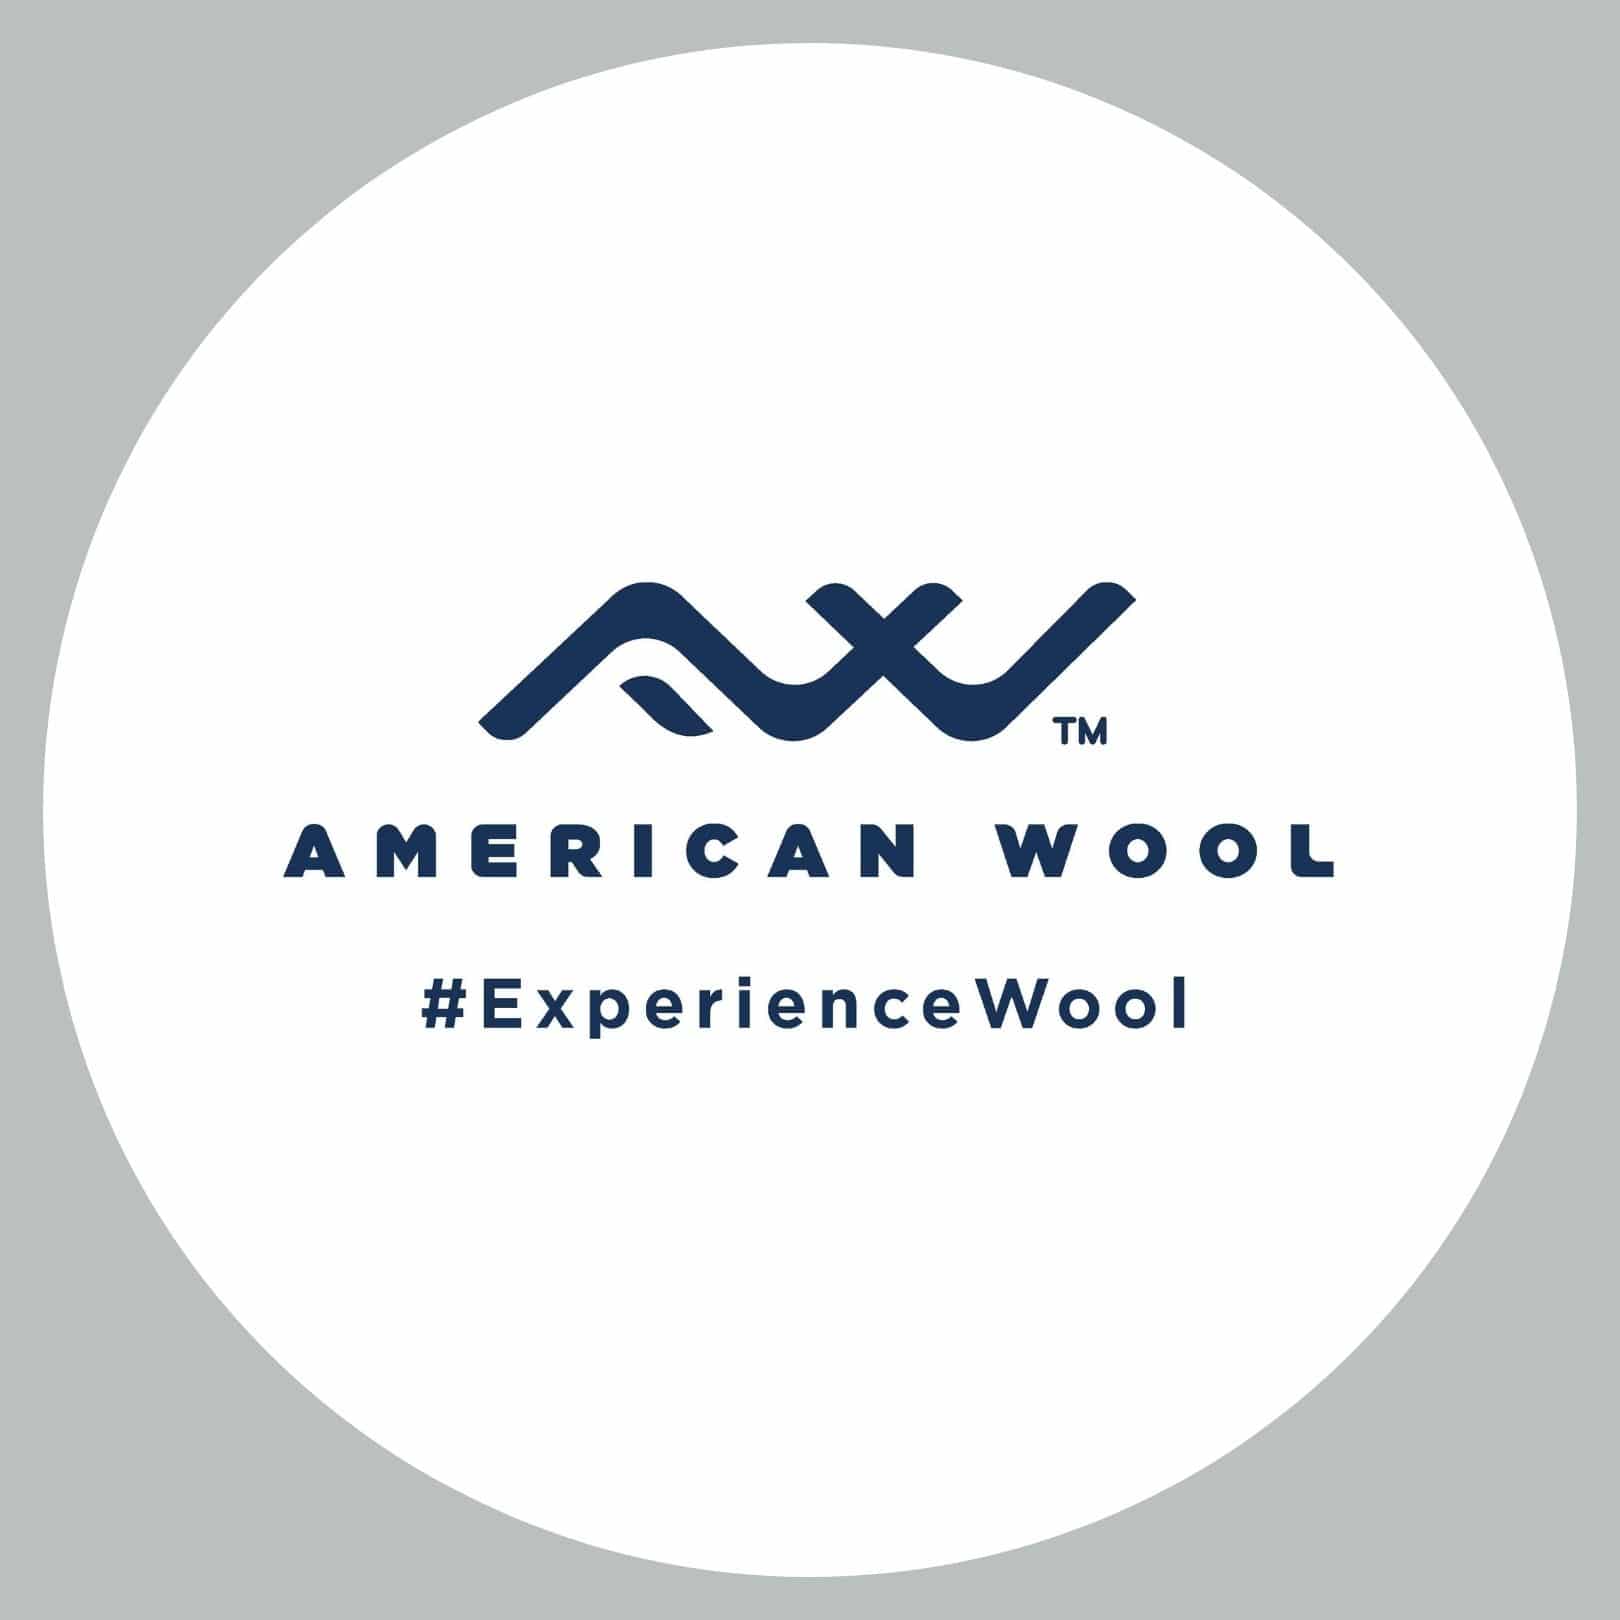 Image of American Wool bumper sticker